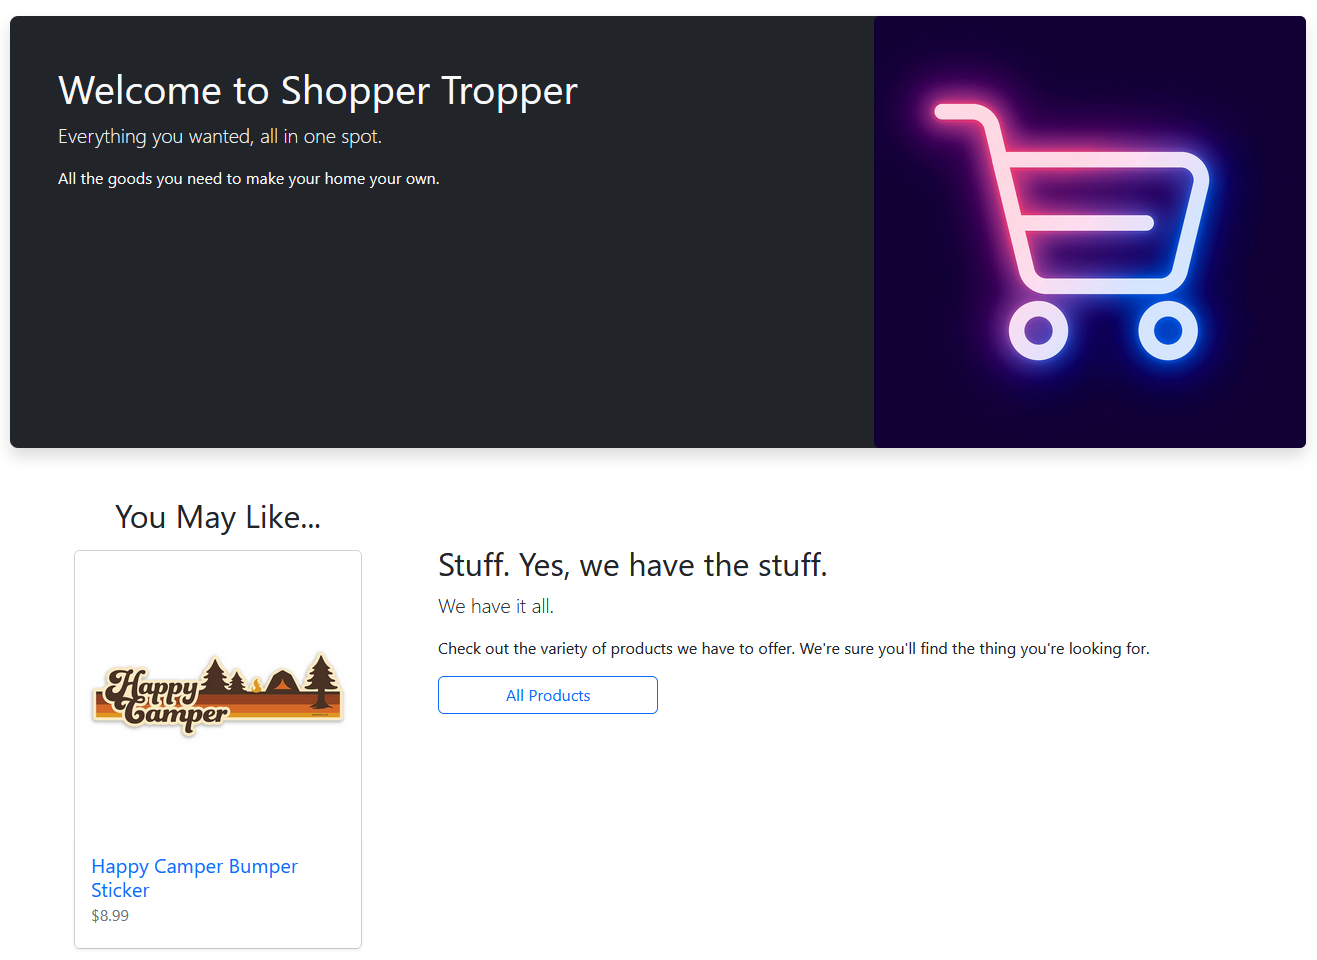 Shopper Tropper homepage